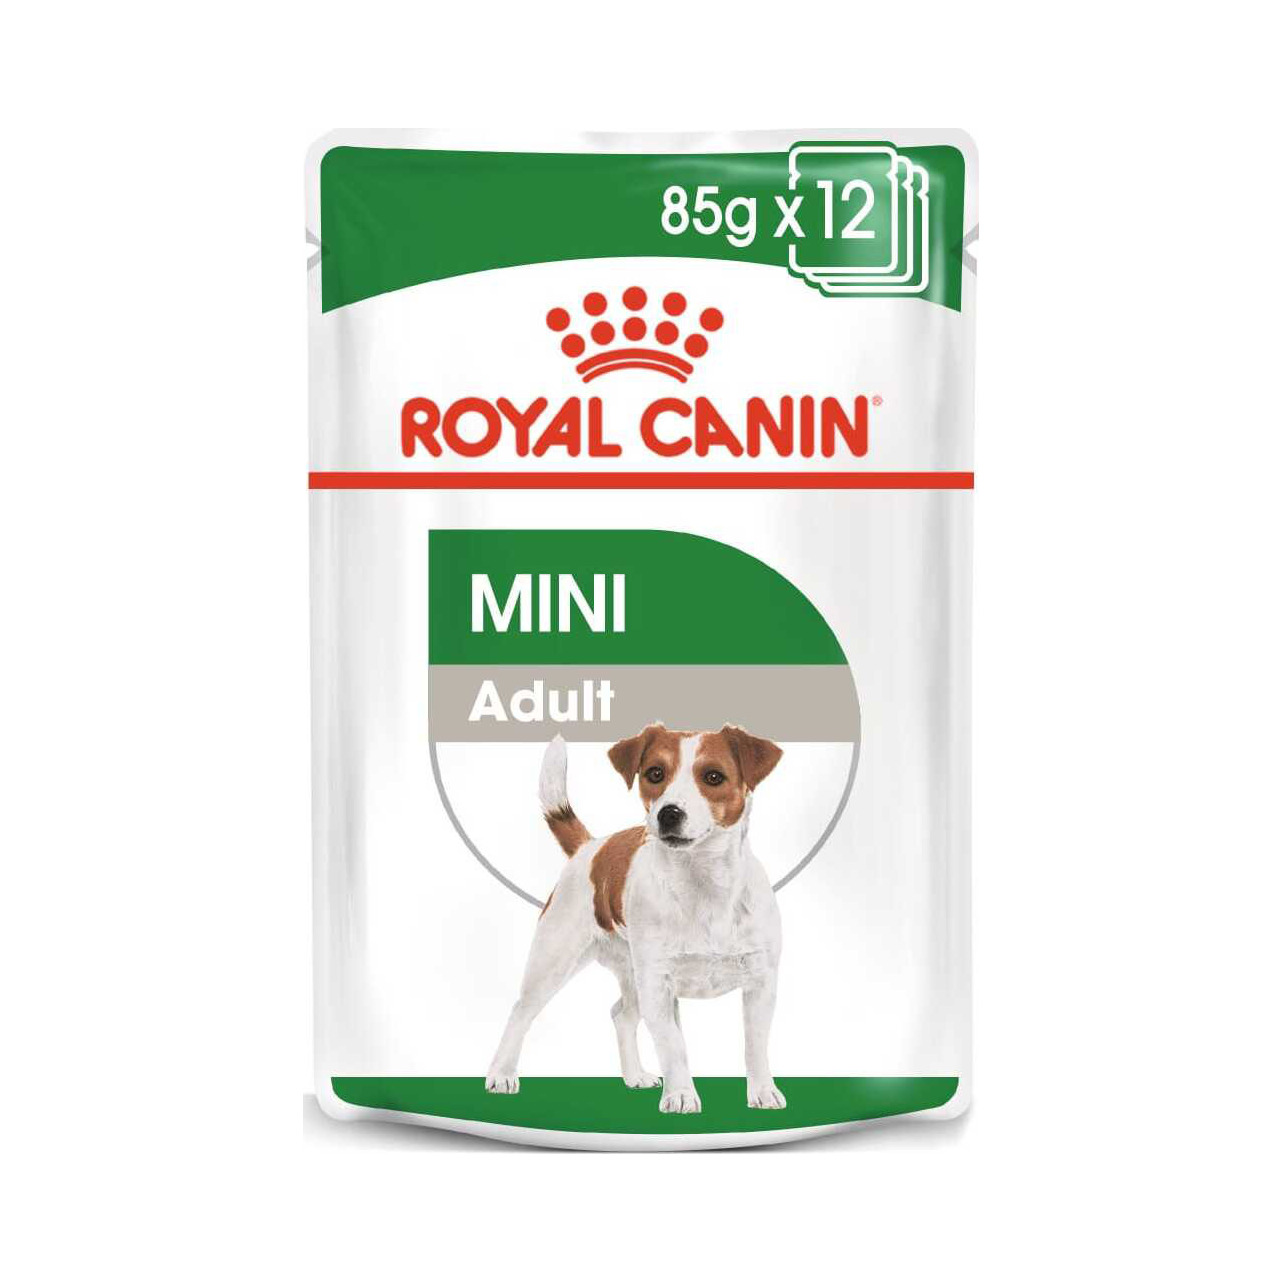 Michelangelo teksten Verzorger Buy Royal Canin Mini Adult Wet for your dog | Tinybuddy